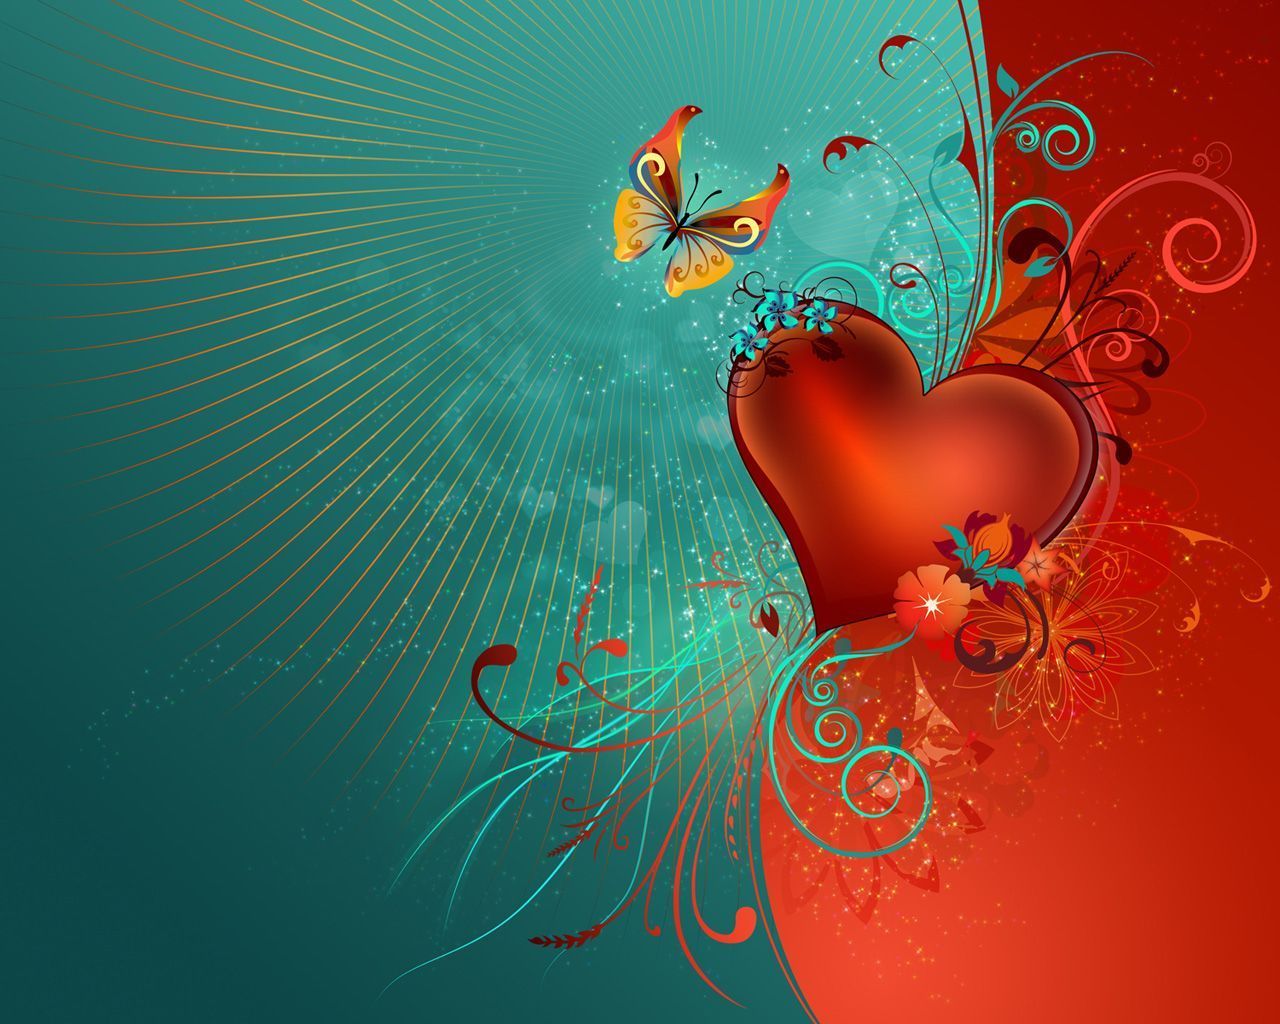 Heart wallpaper - Beautiful Pictures Wallpaper (31395907) - Fanpop